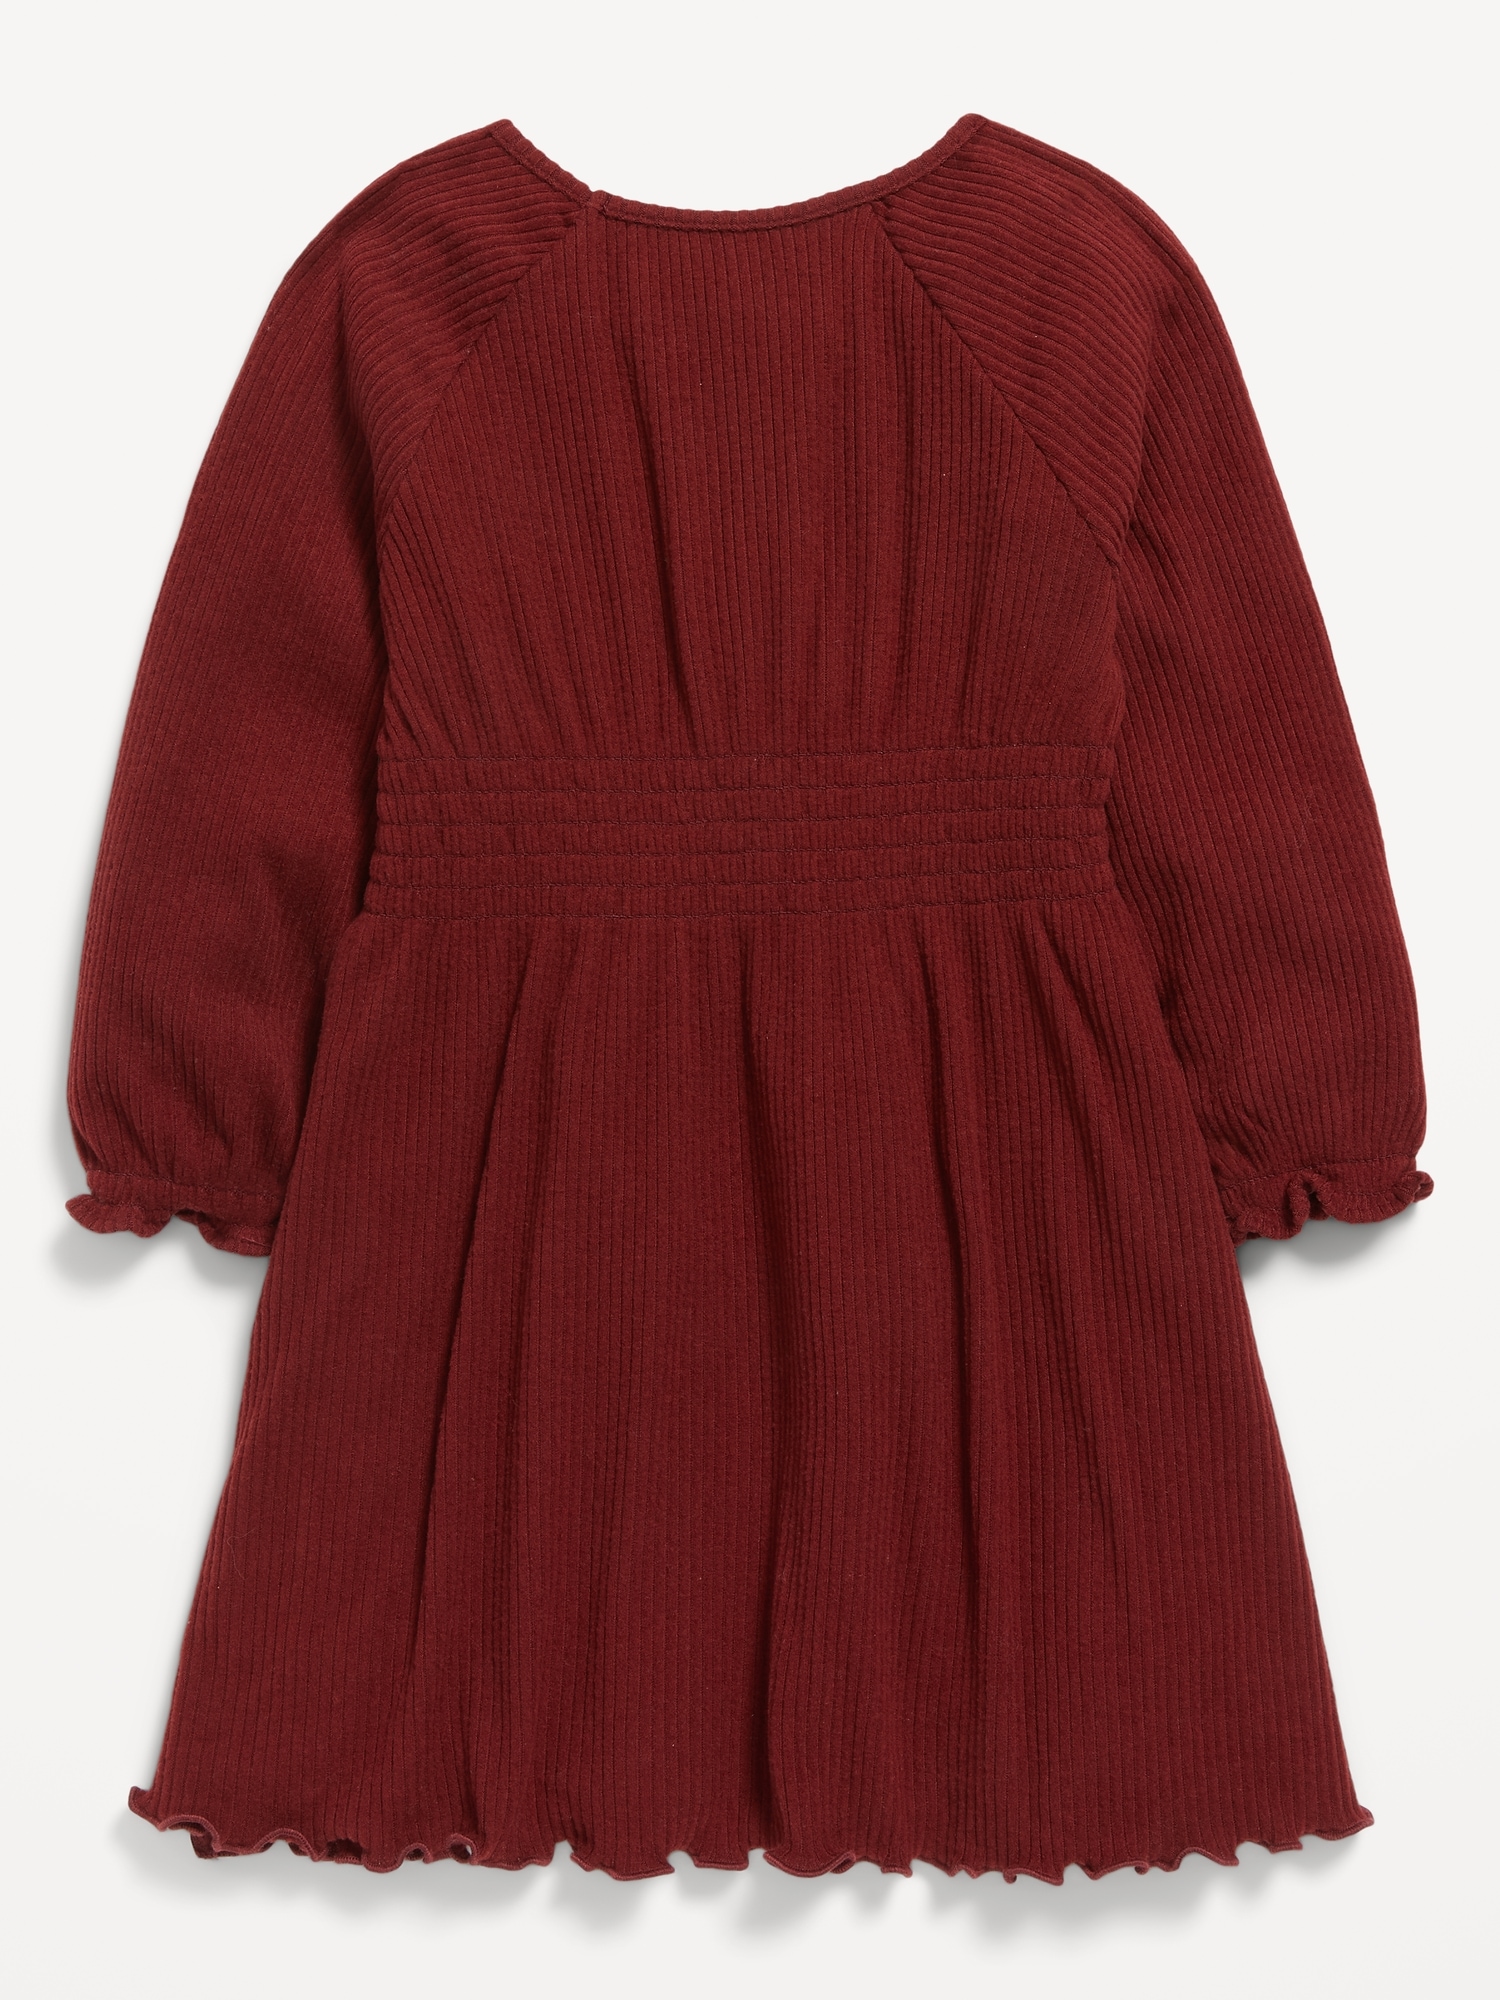 Long-Sleeve Rib-Knit Smocked-Waist Dress for Toddler Girls | Old Navy